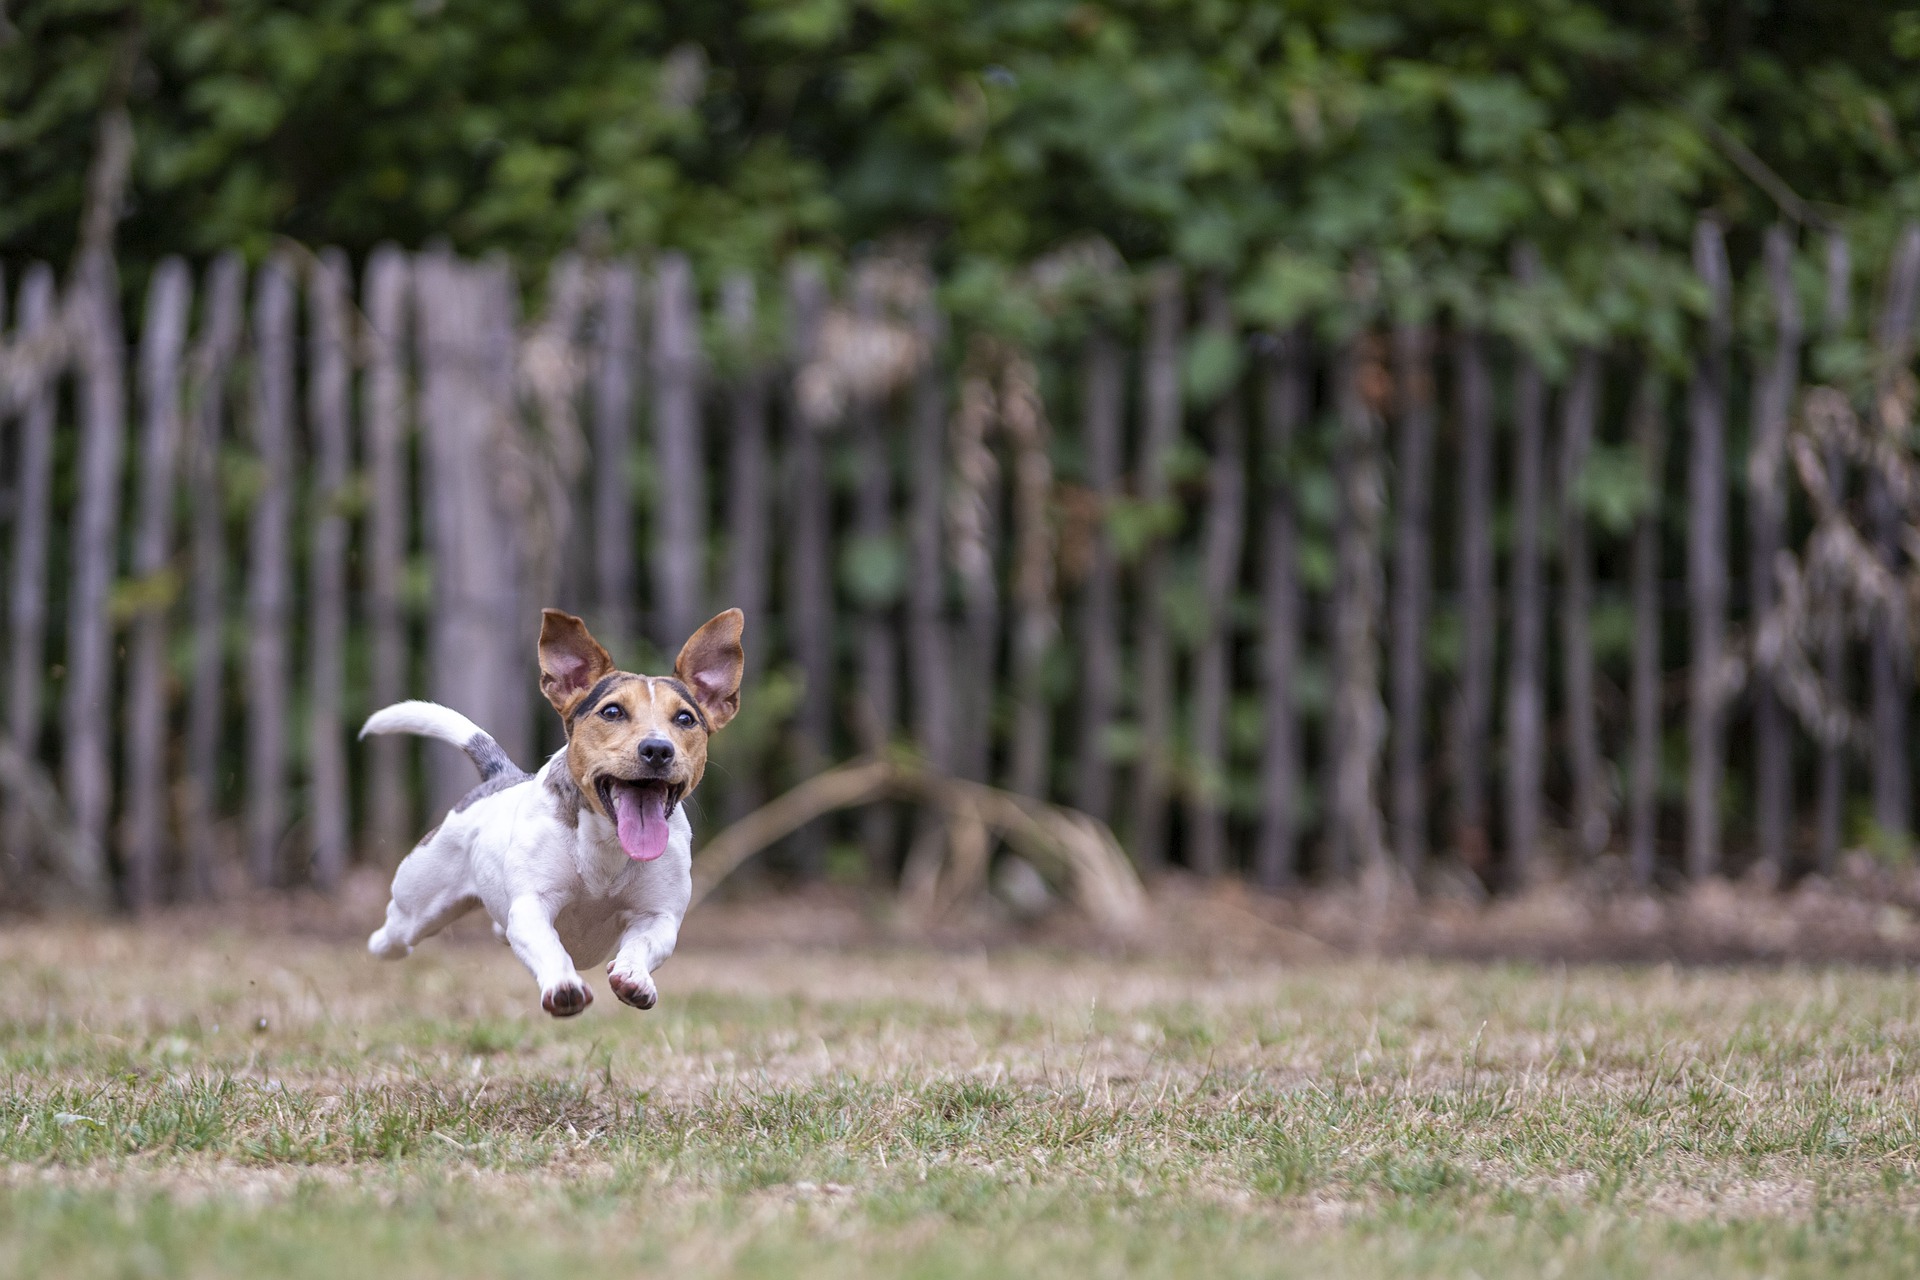 Jack Russel Terrier running across grassy field.